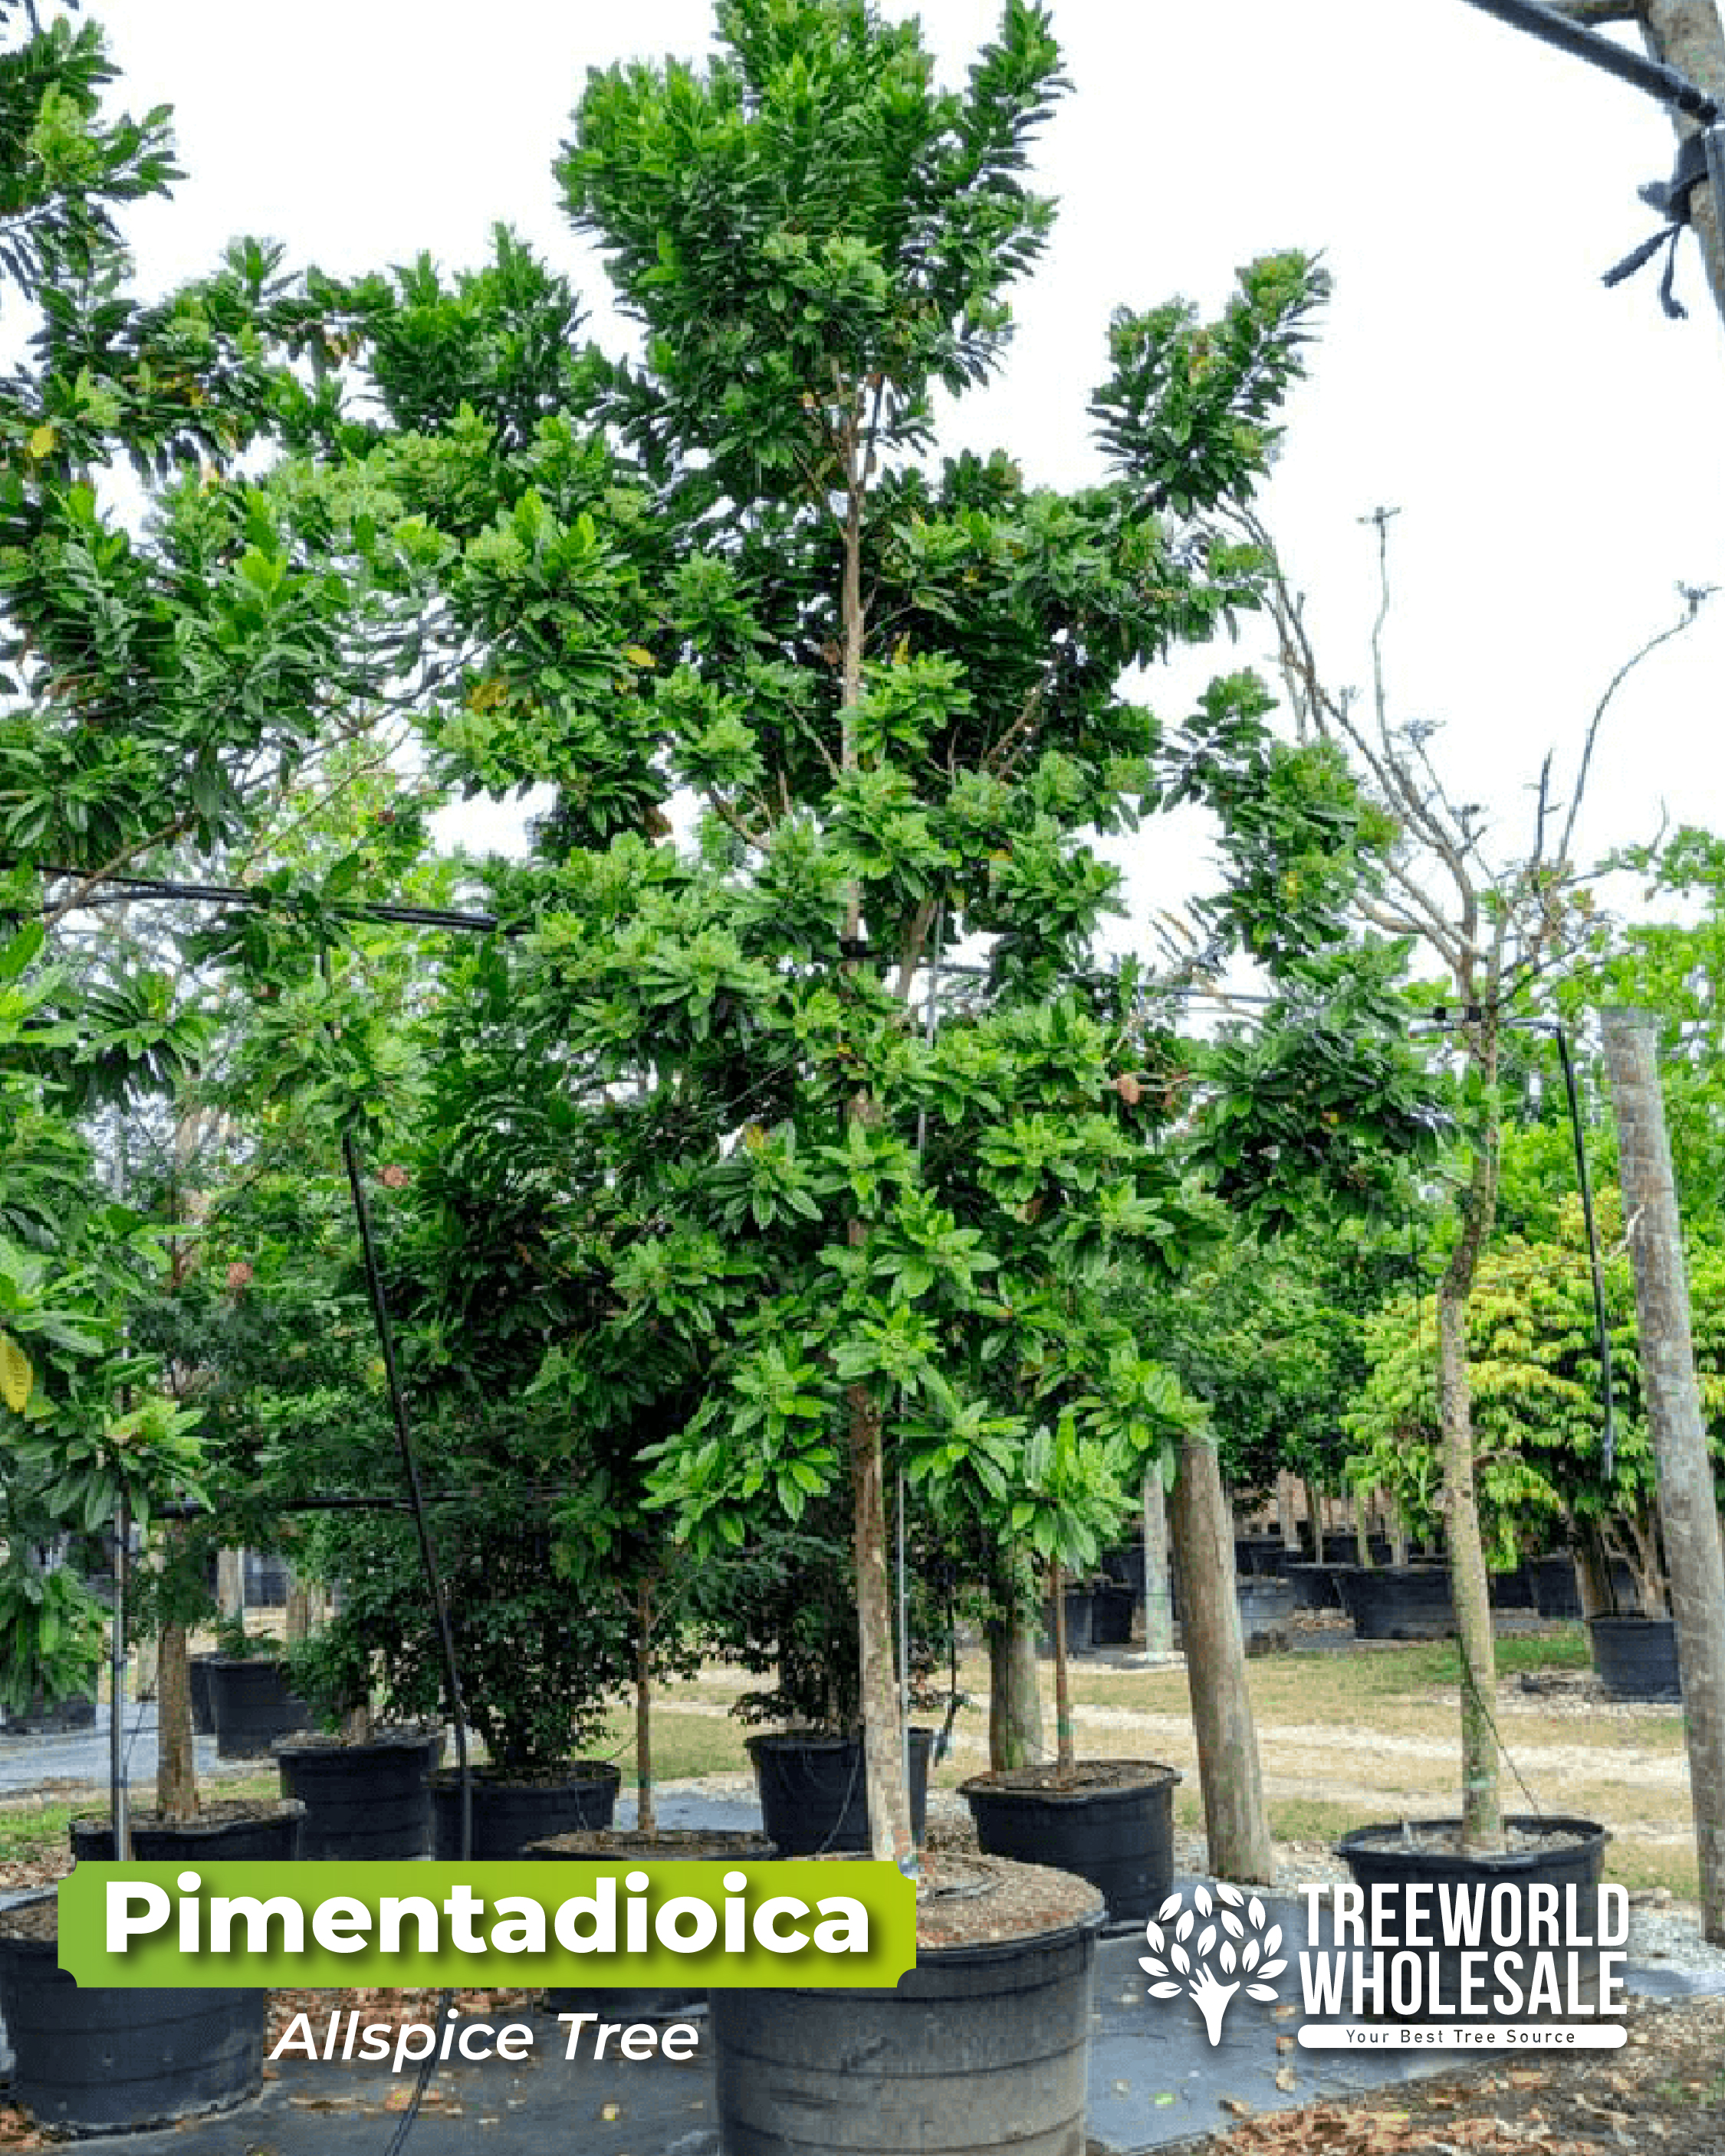 pimenta-dioica-all-spice-tree